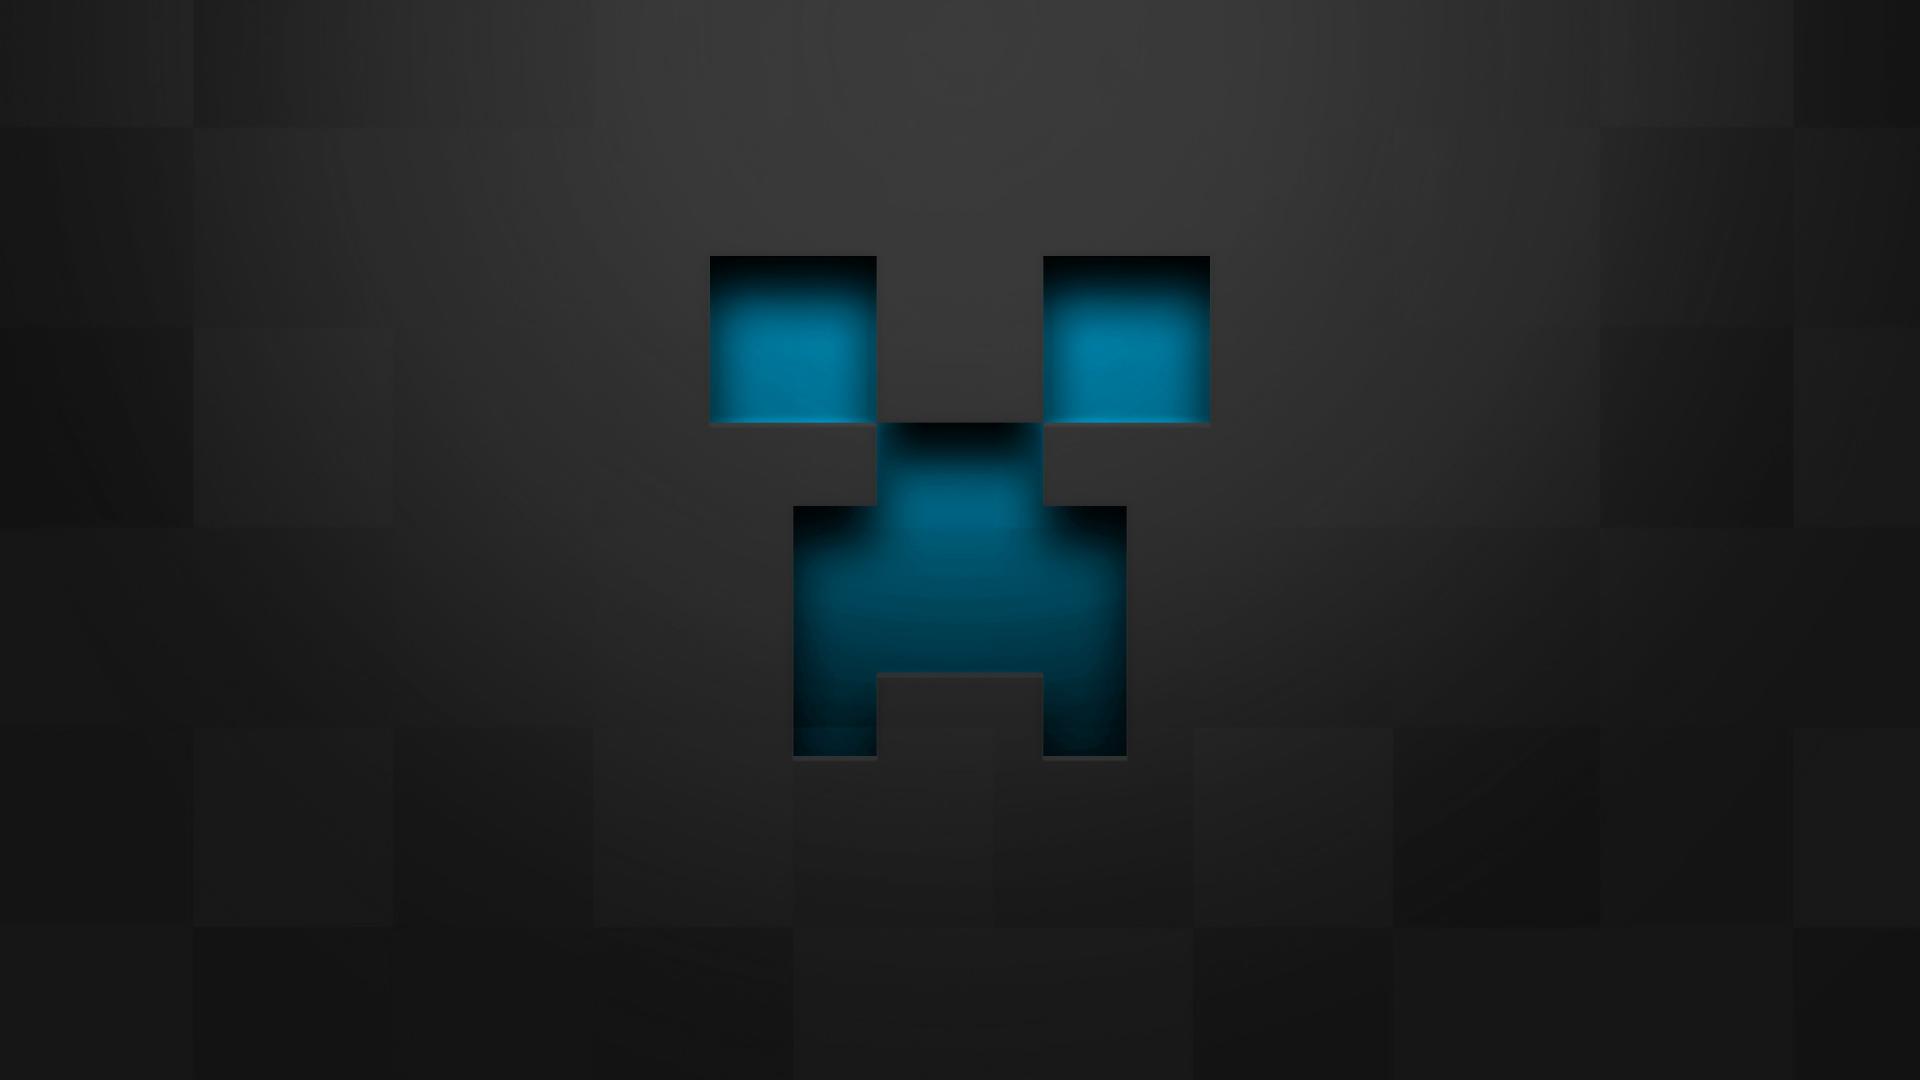 Free Download Minecraft Blue Creeper Gray Pixelart Wallpaper 88756 Images, Photos, Reviews